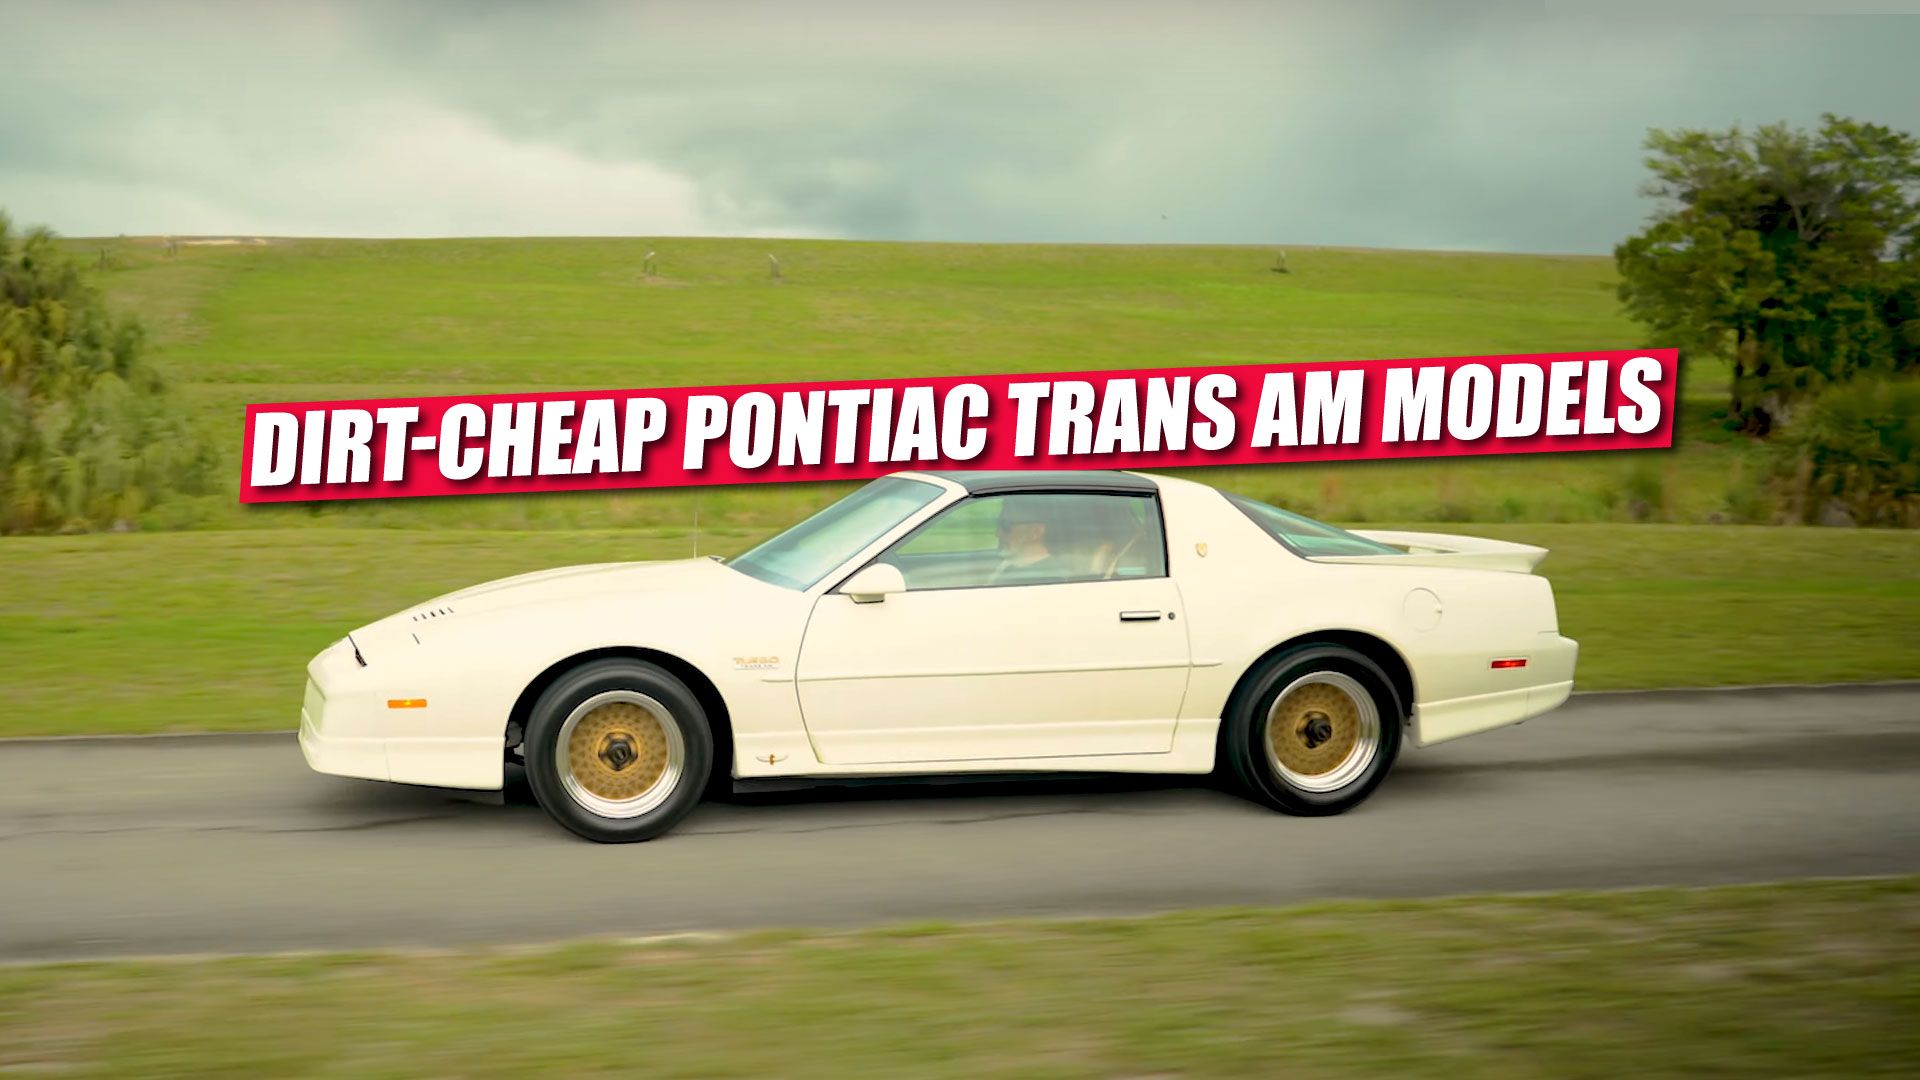 Cheap Pontiac Trans Am featured image